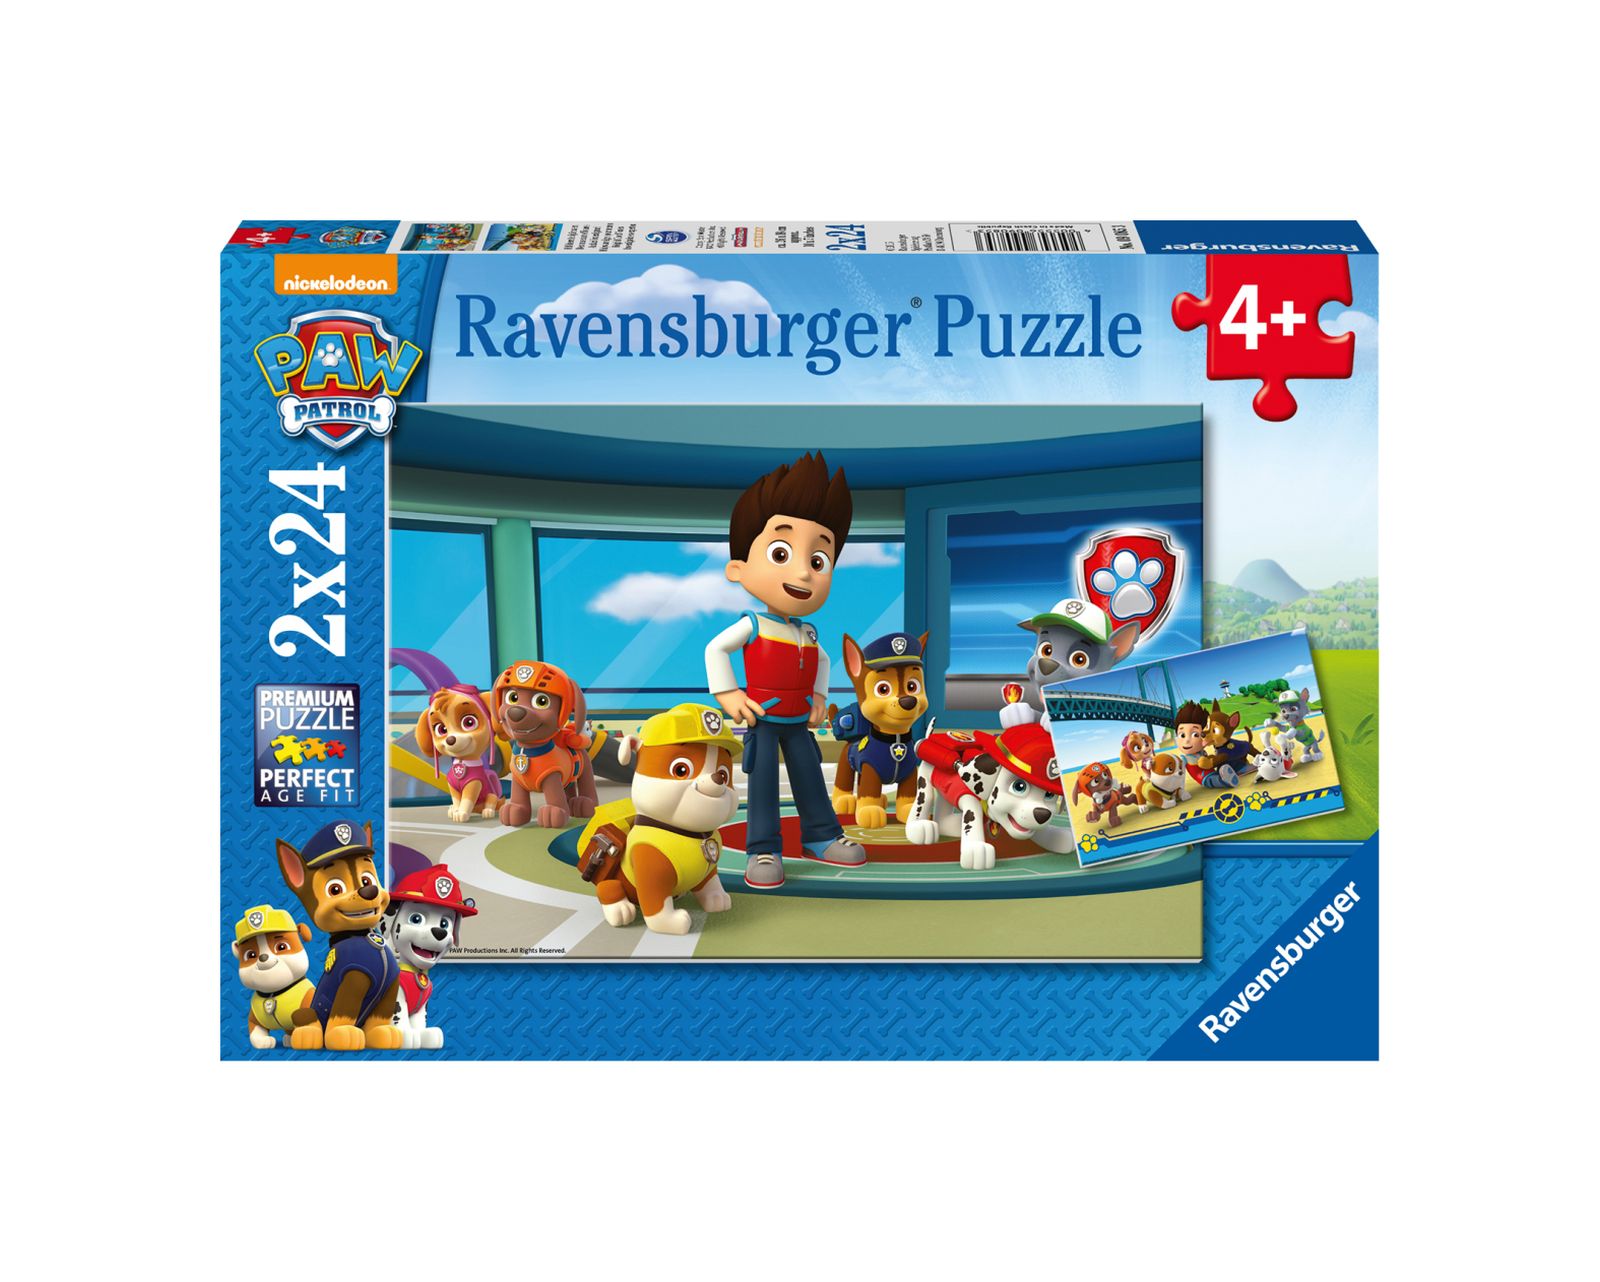 Ravensburger 2 puzzle 24 pezzi - paw patrol b - RAVENSBURGER, Paw Patrol